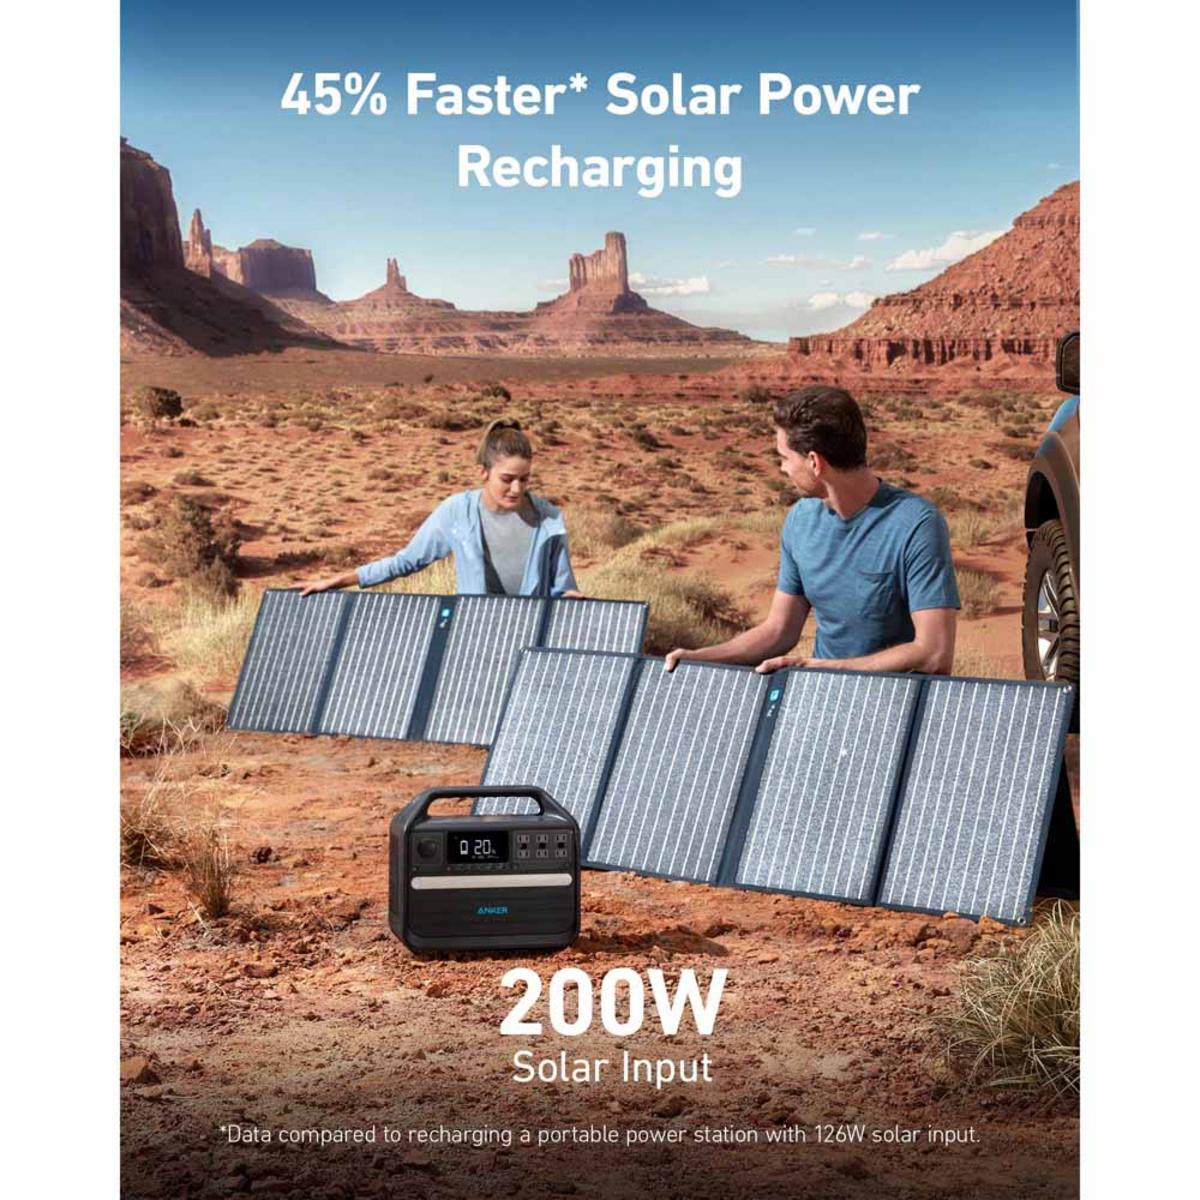 Anker Solar Generator 555 - PowerHouse 1024Wh with Solar Panels 100W